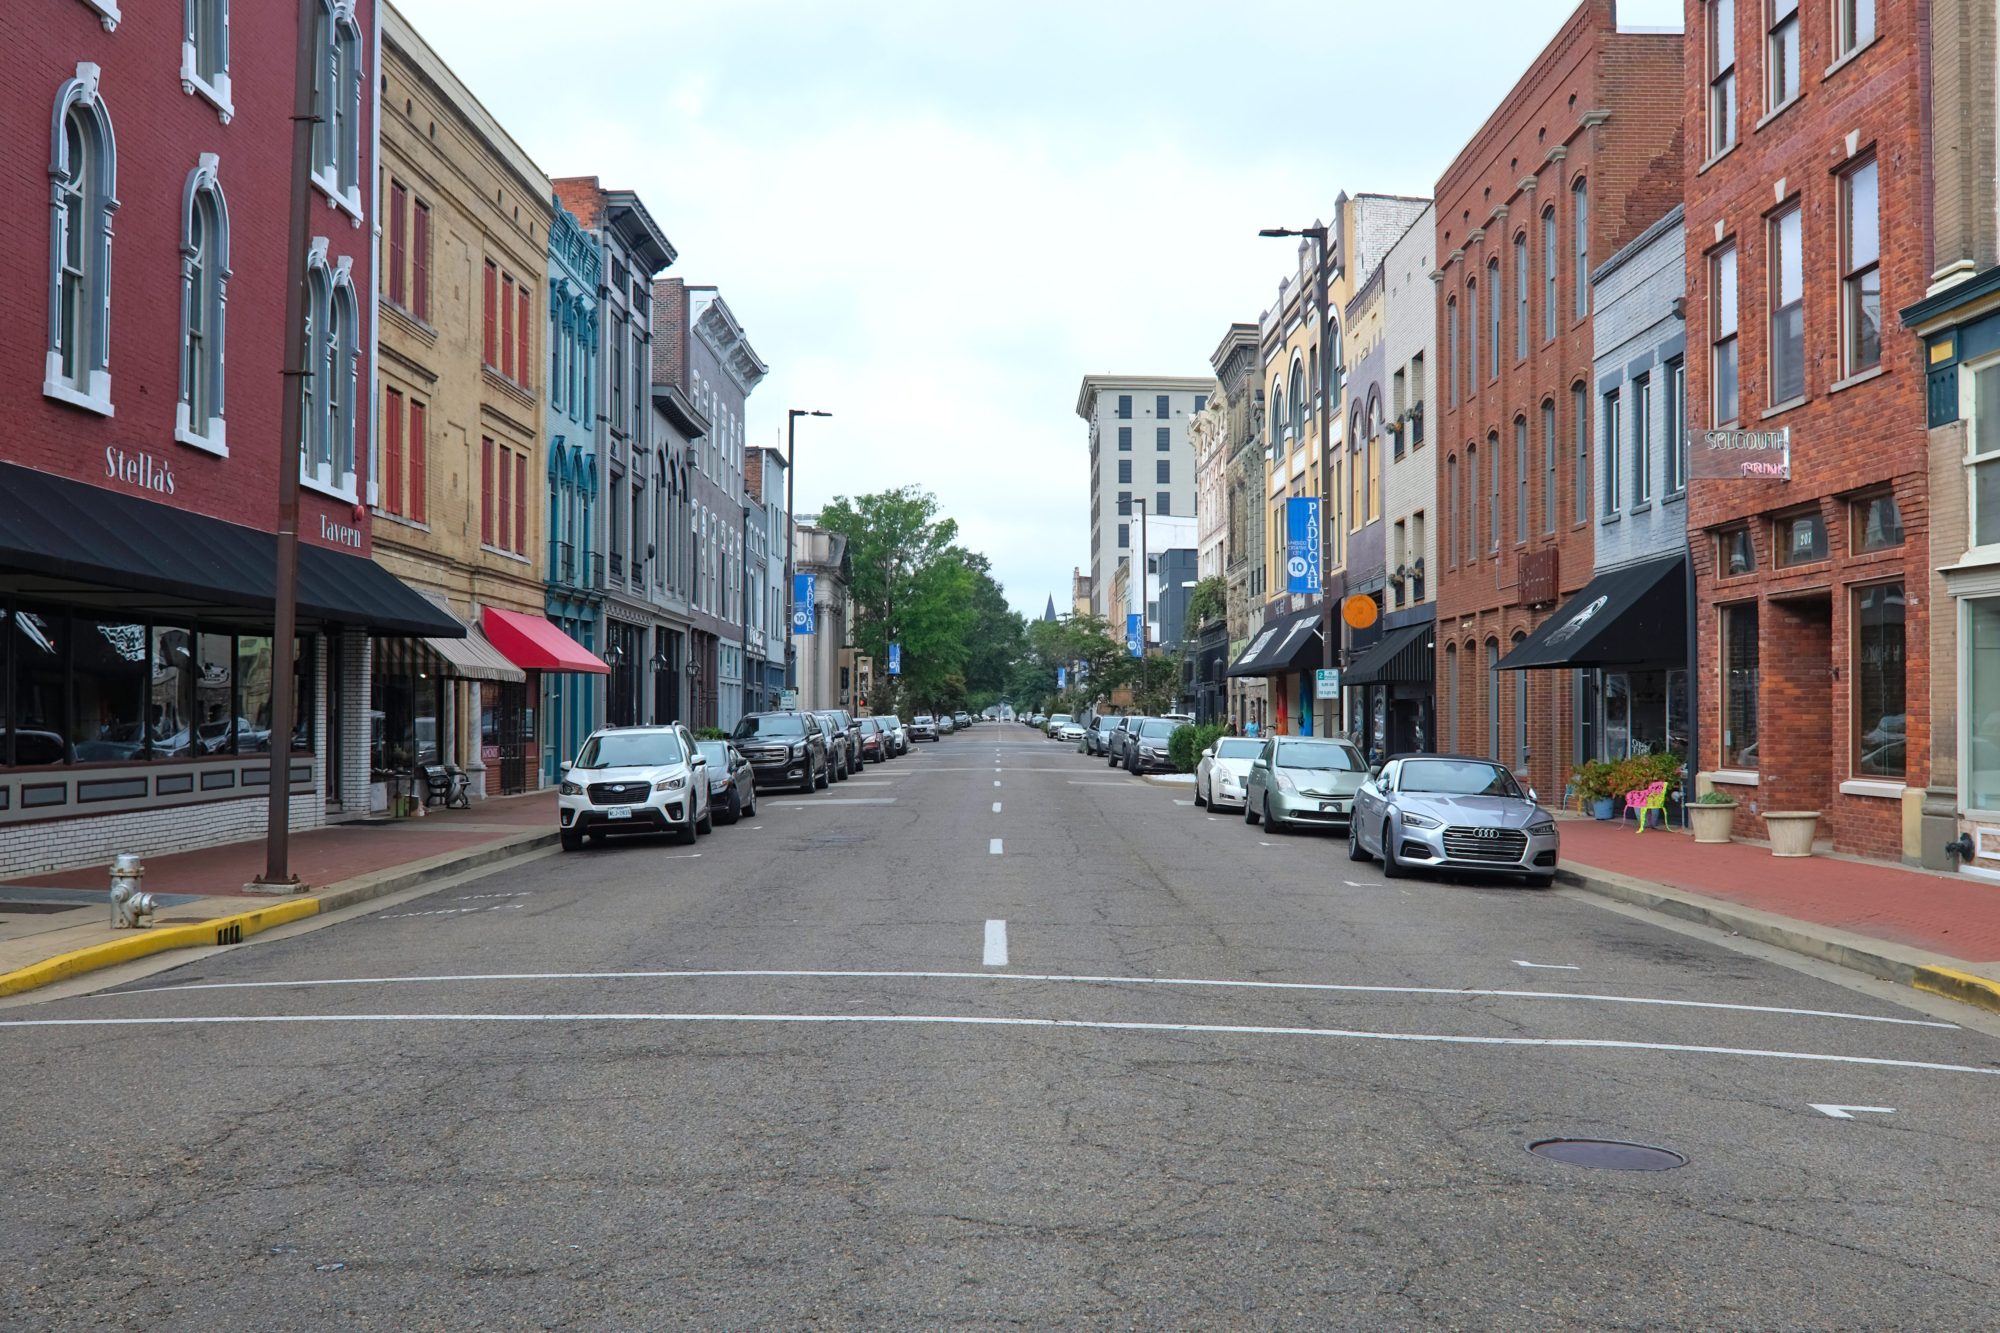 A photo of Broadway Street in Paducah, Kentucky